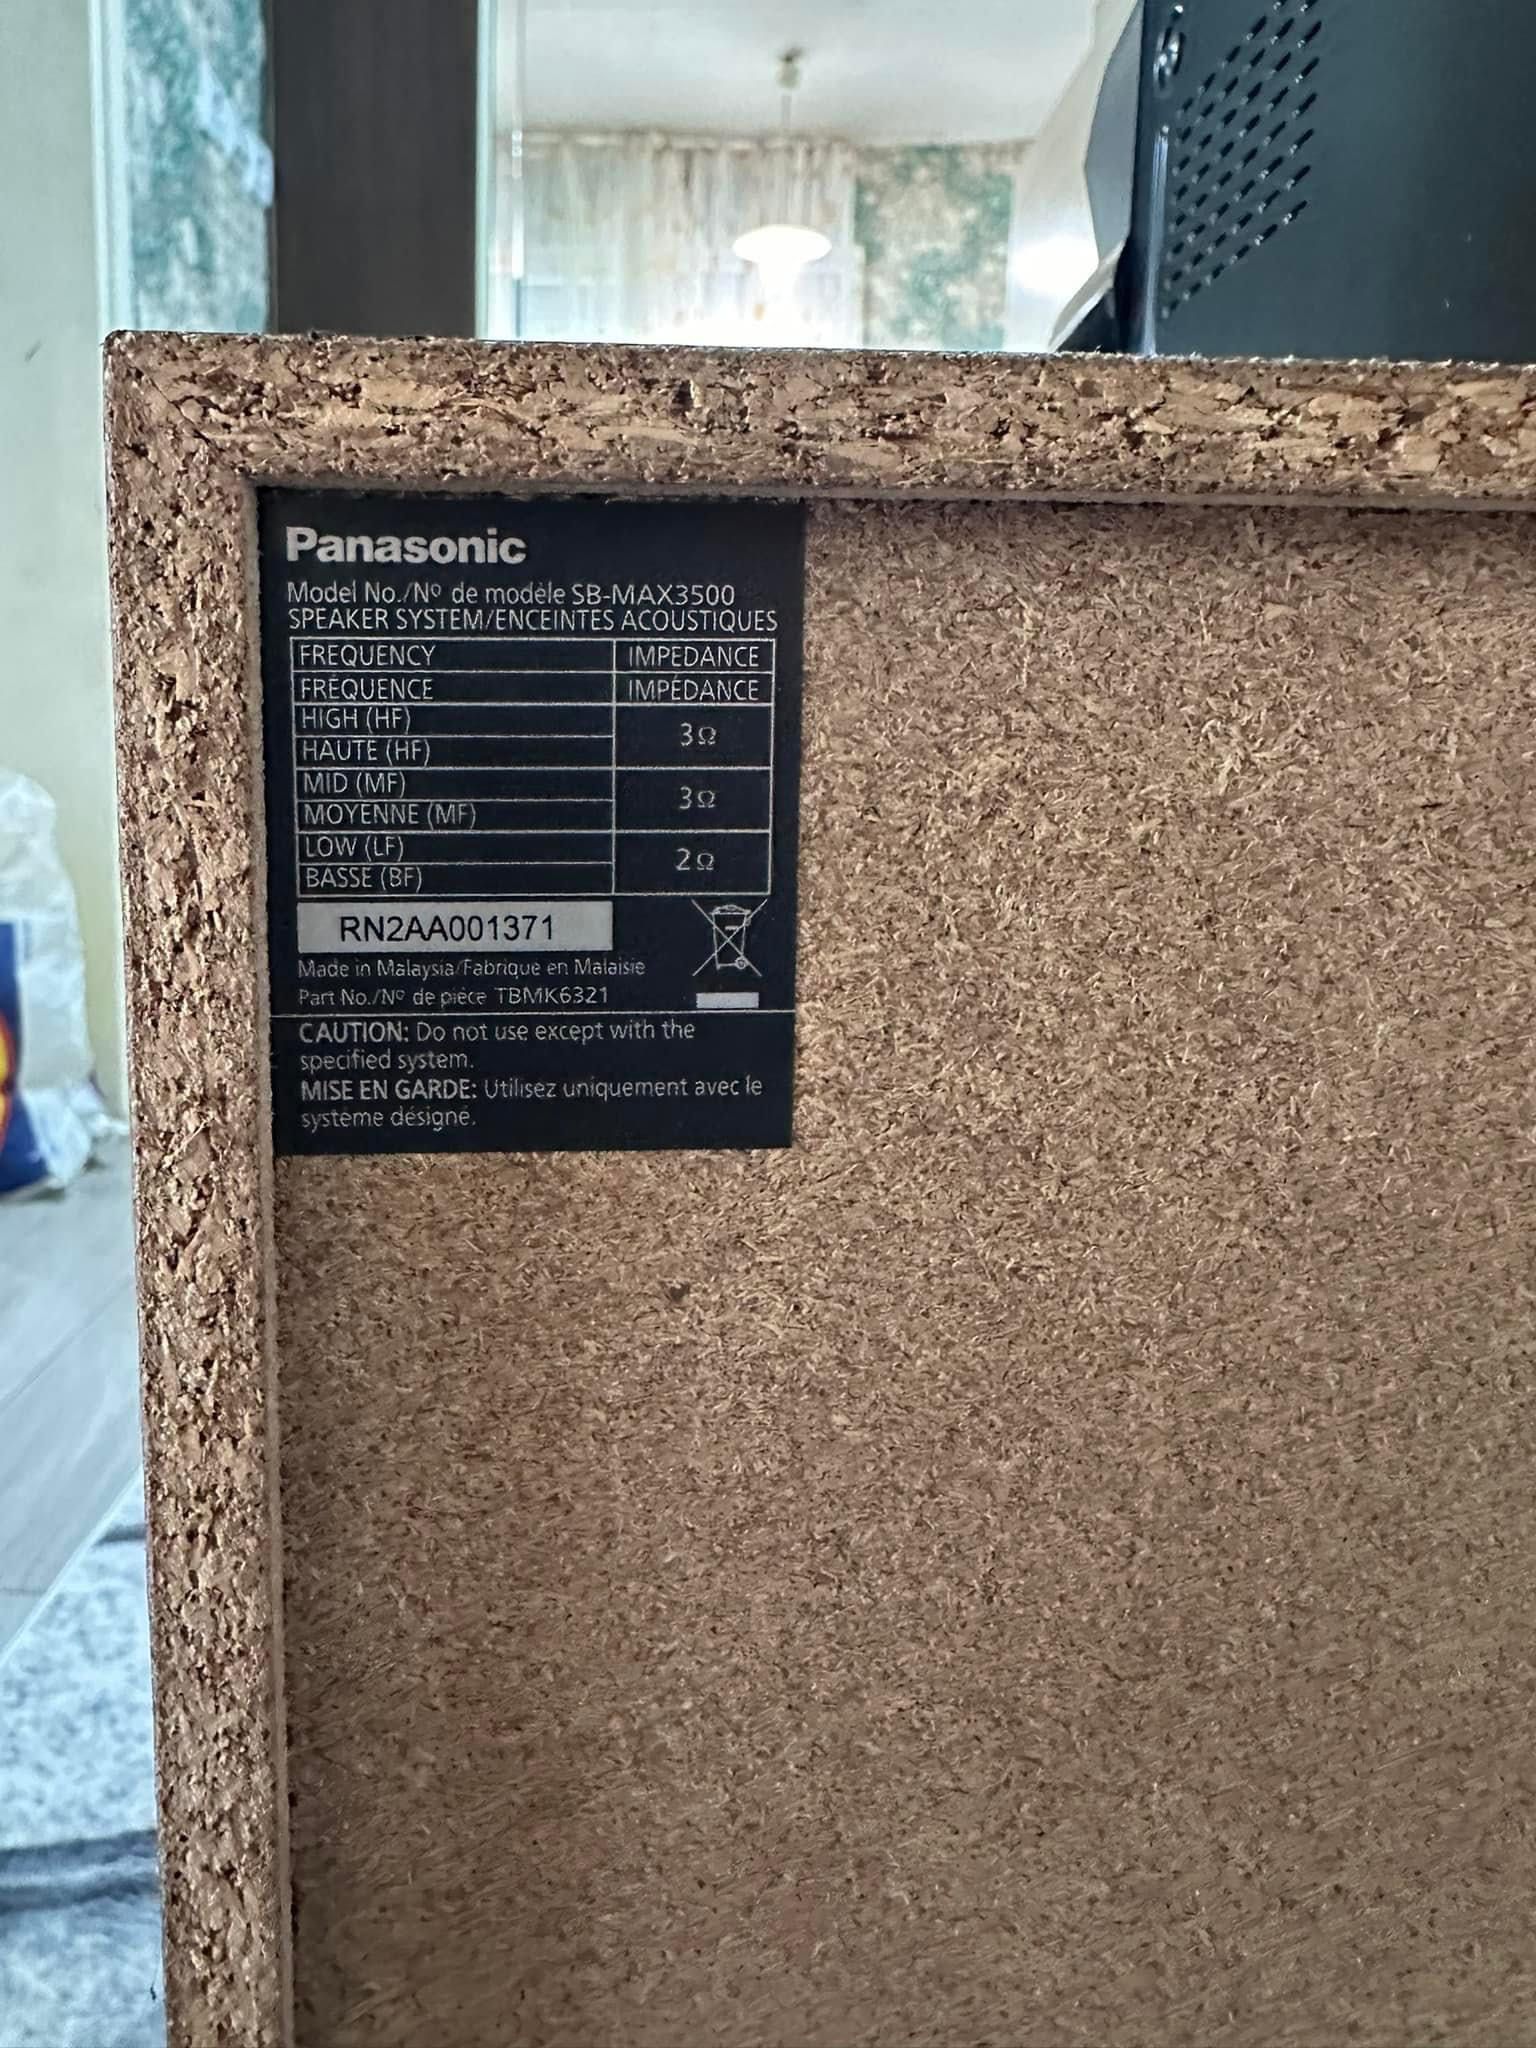 Panasonic SC-max3500